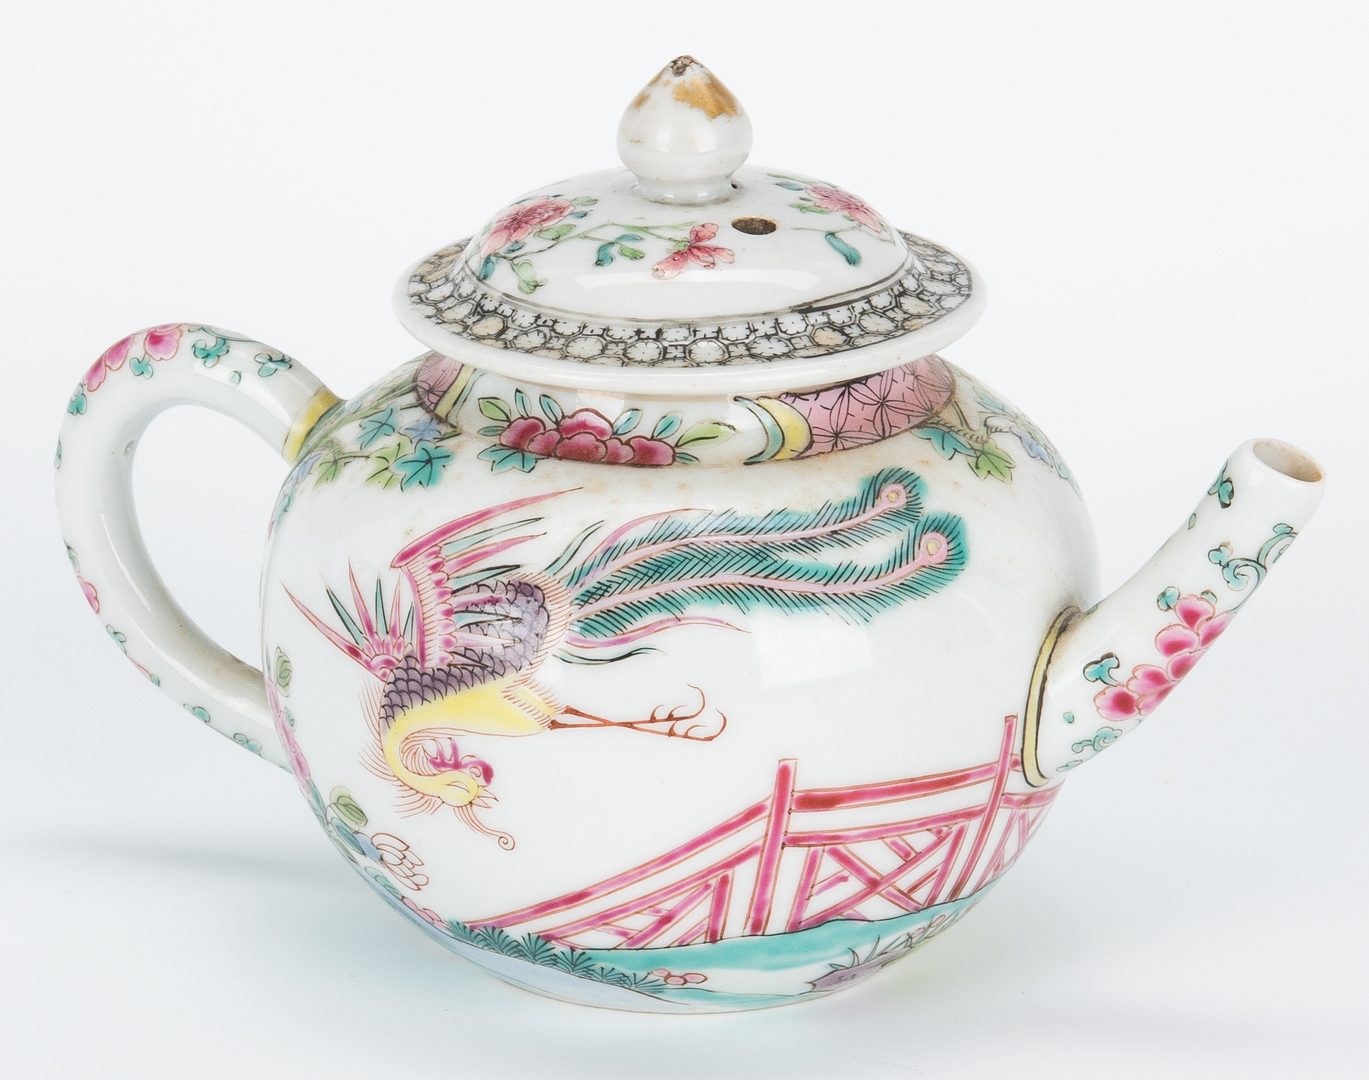 Lot 16: Chinese Export Teapots, Creamers & Lid, 5 pcs